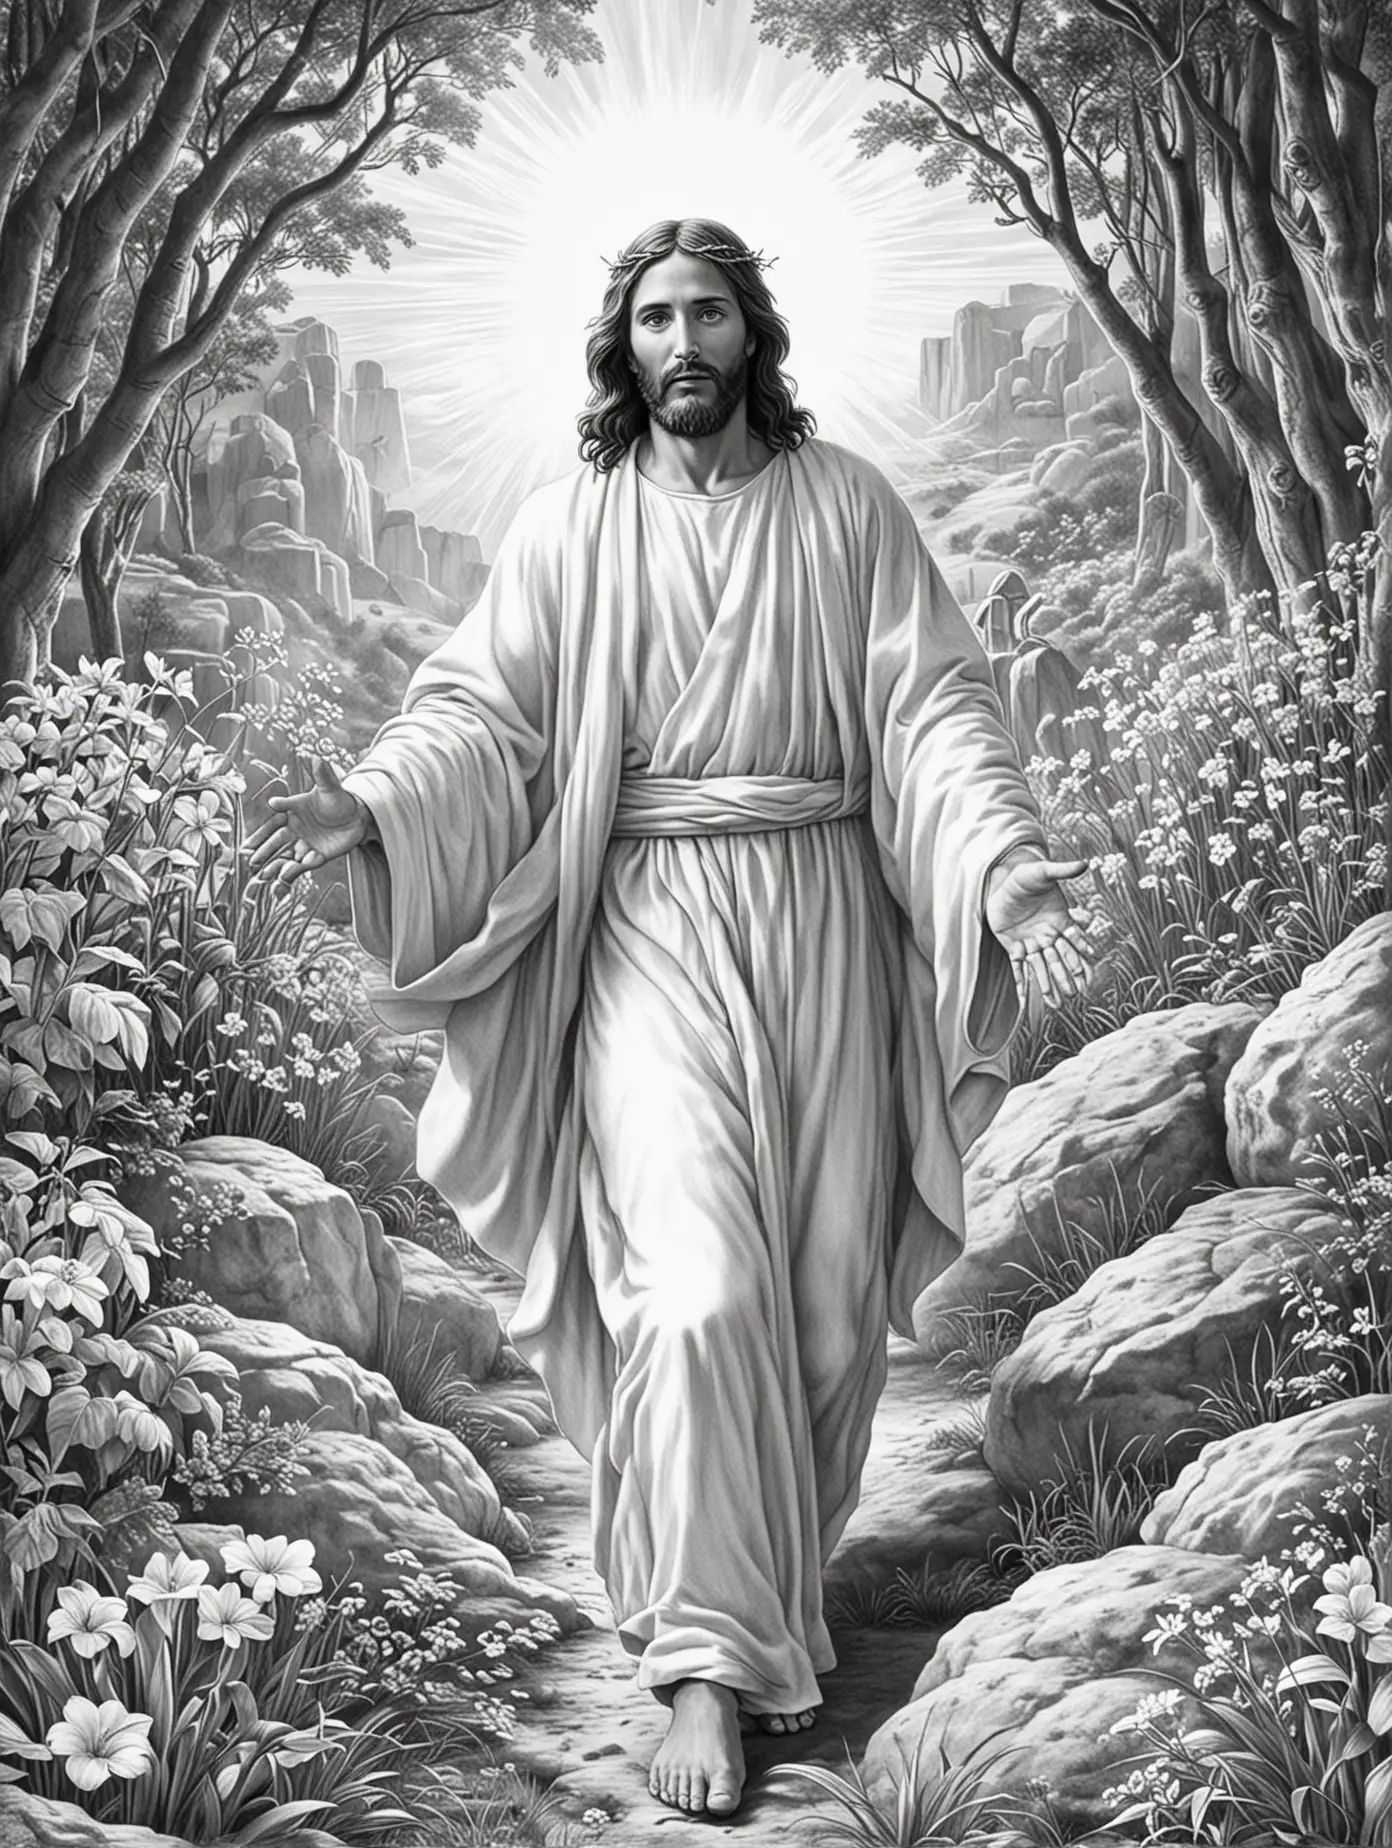 Risen Jesus Christ A Gentle Monochrome Depiction for Children